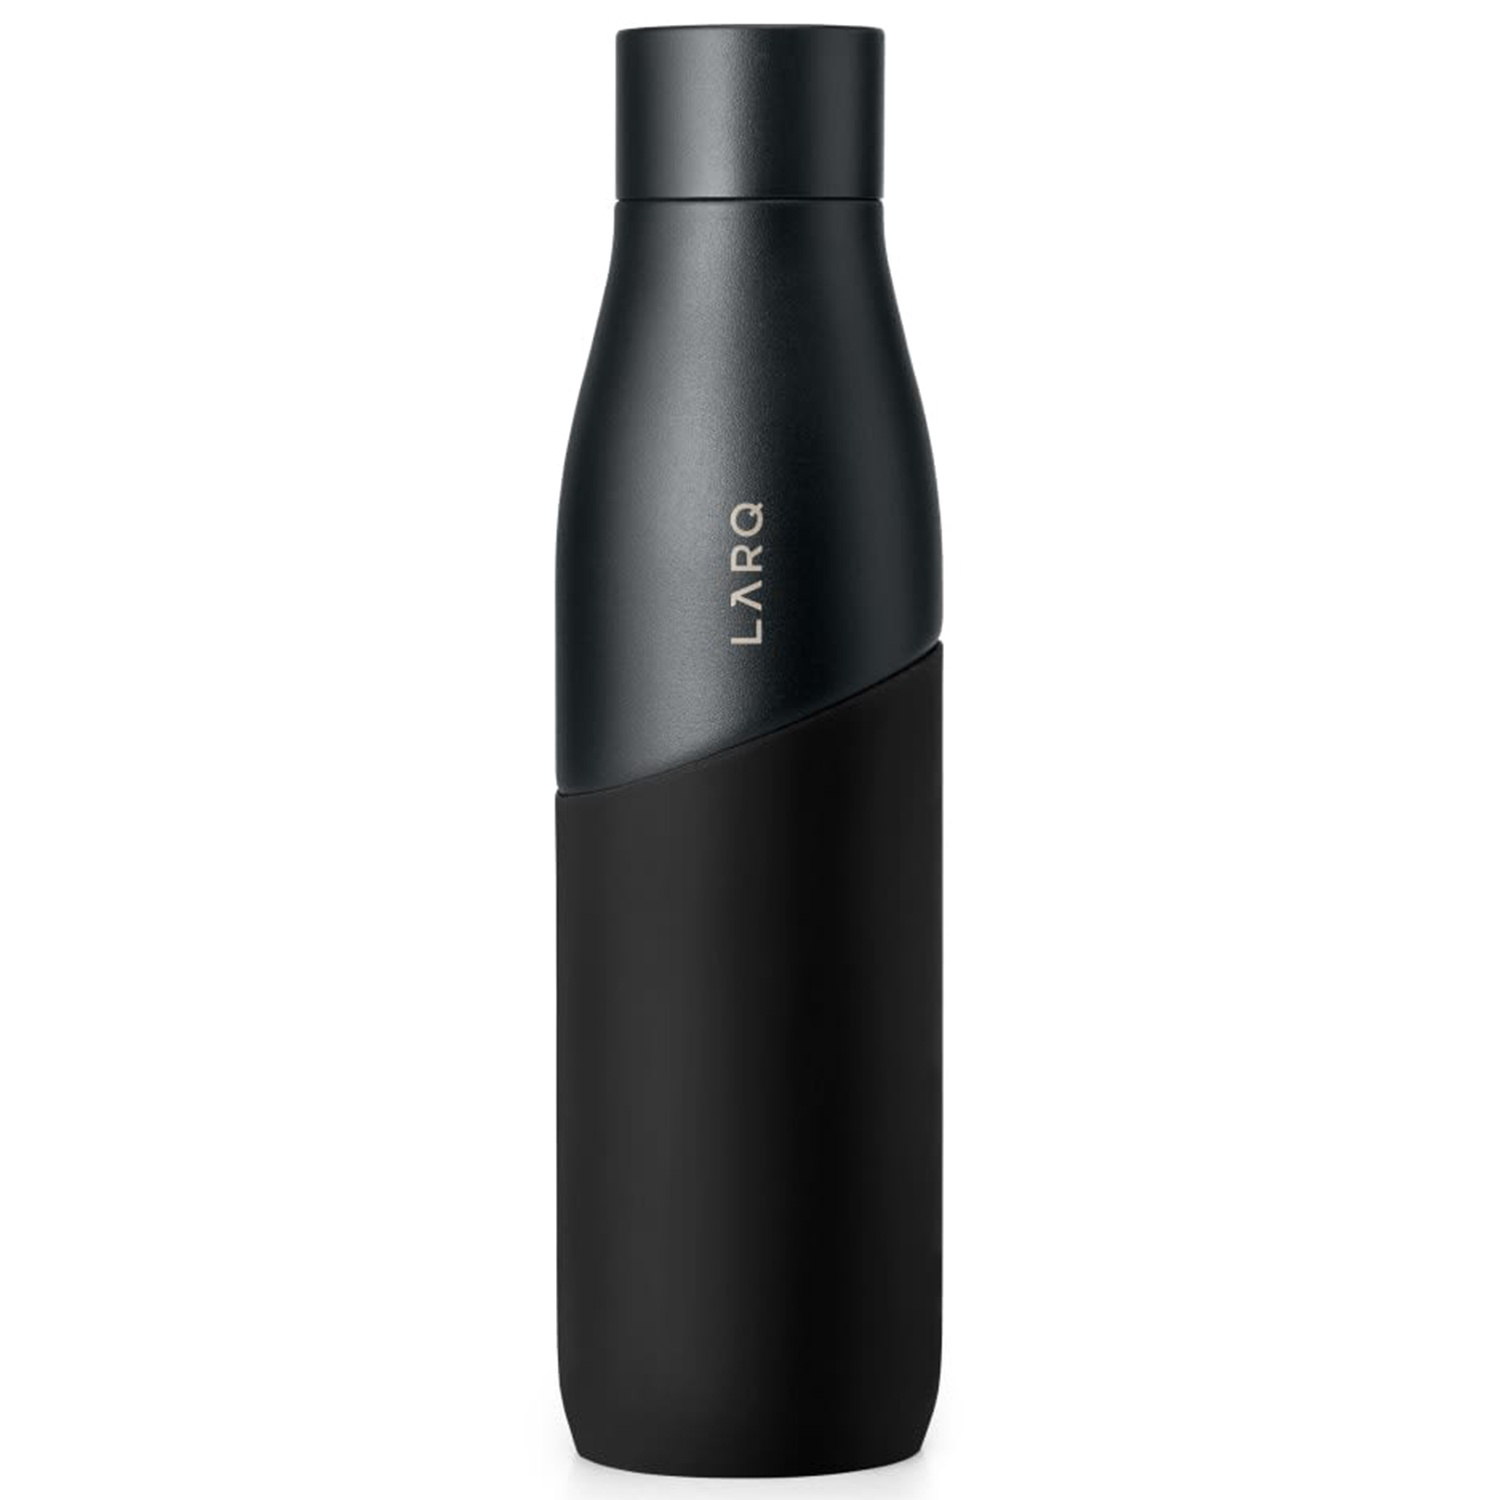 LARQ - PureVis Movement Water Bottle - Obsidian Black - 32 oz